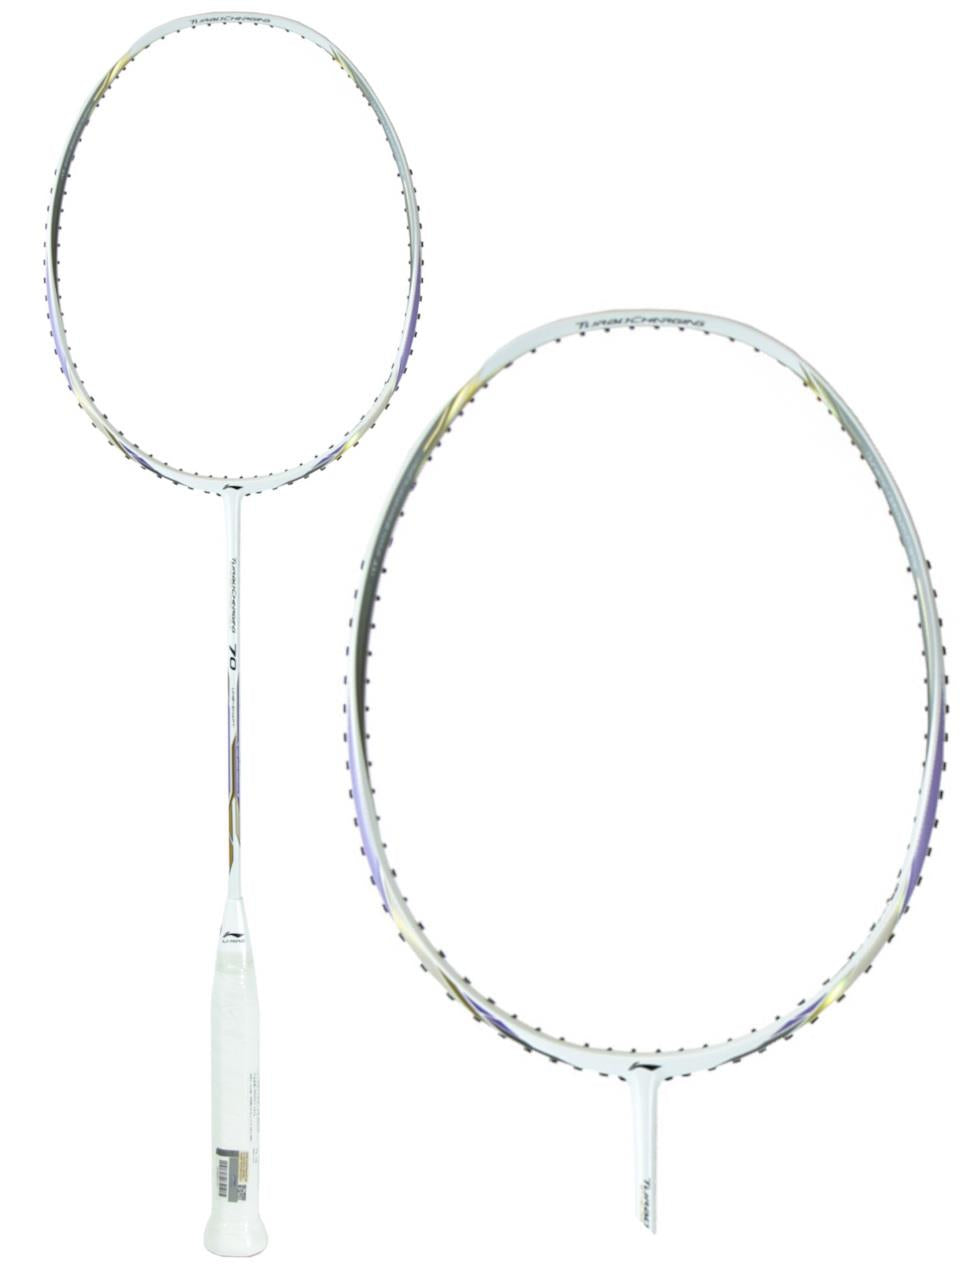 Li-Ning Turbo Charging 70 Drive Badminton Racket - White